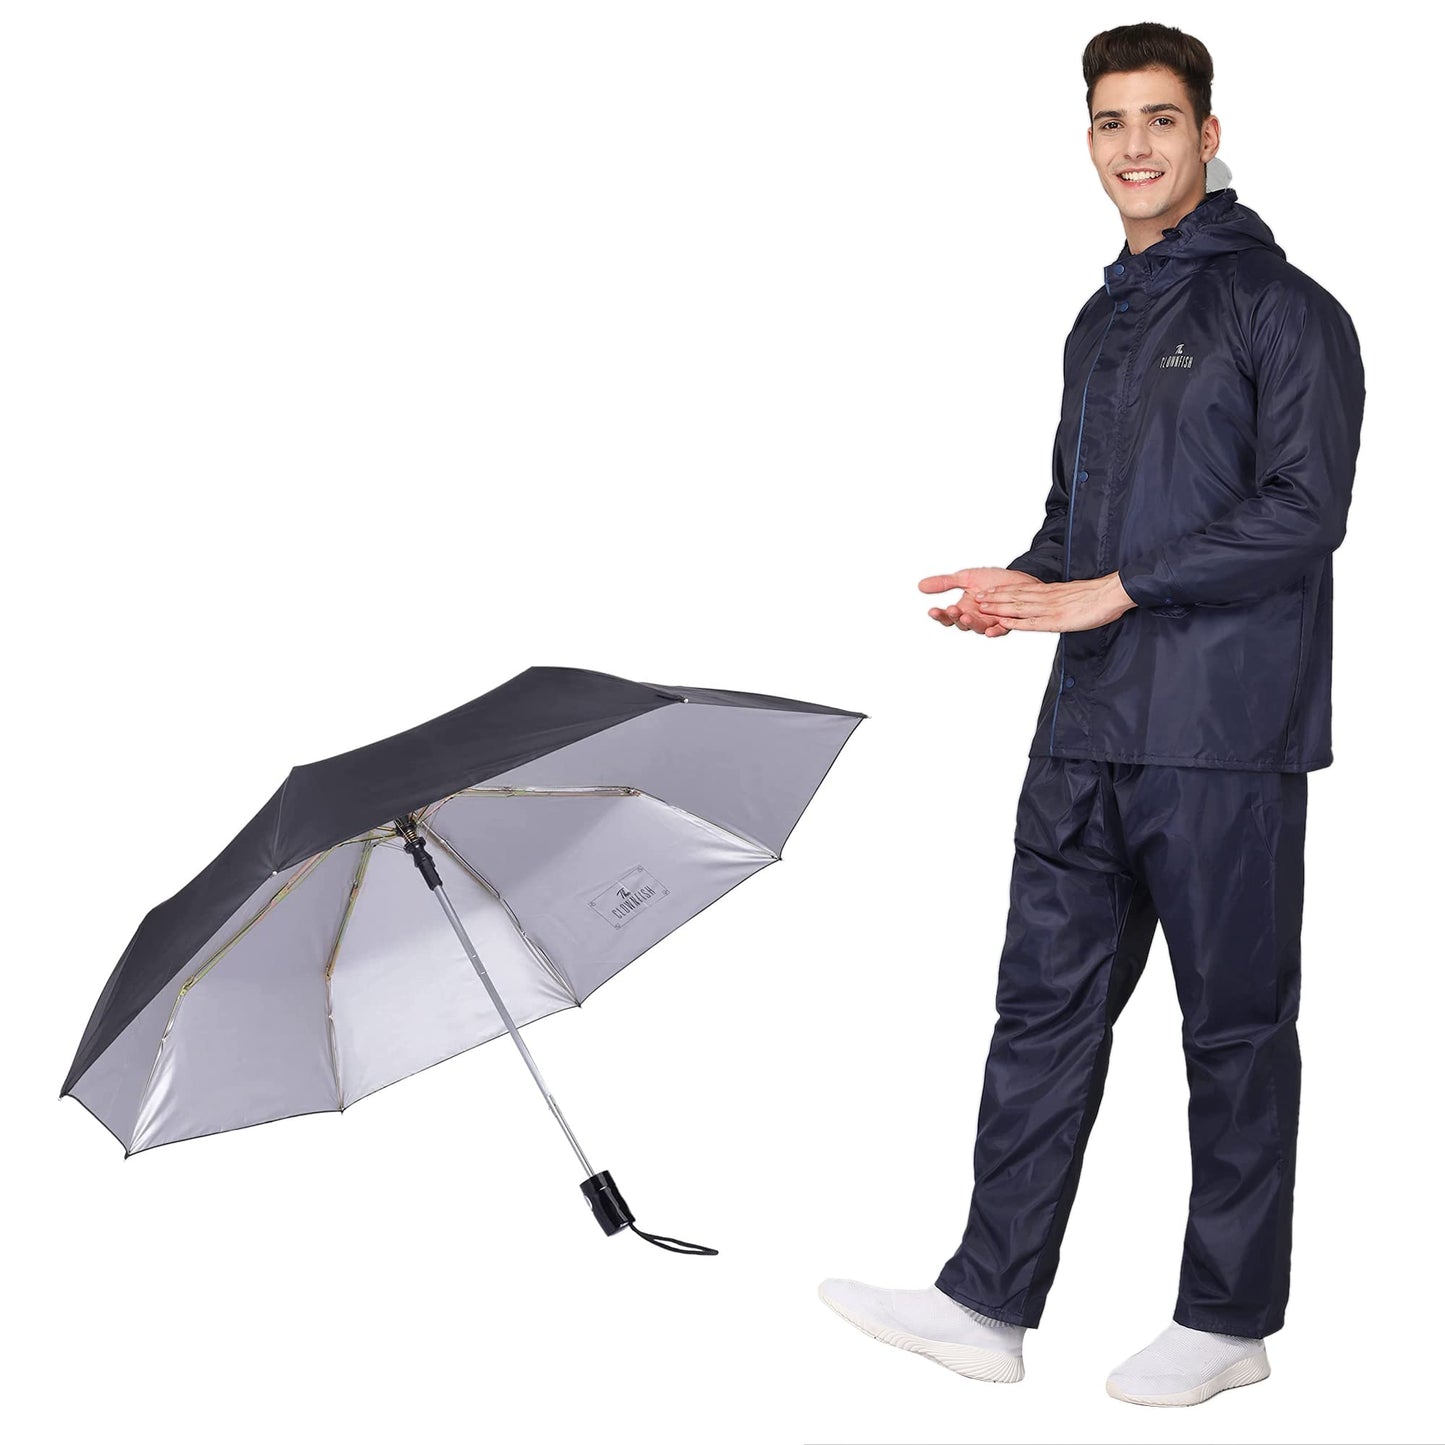 THE CLOWNFISH Combo Of Rain Coat for Men Waterproof Polyester (Blue 2XL) Umbrella Savior Series 3 Fold Waterproof Polyester (Black)